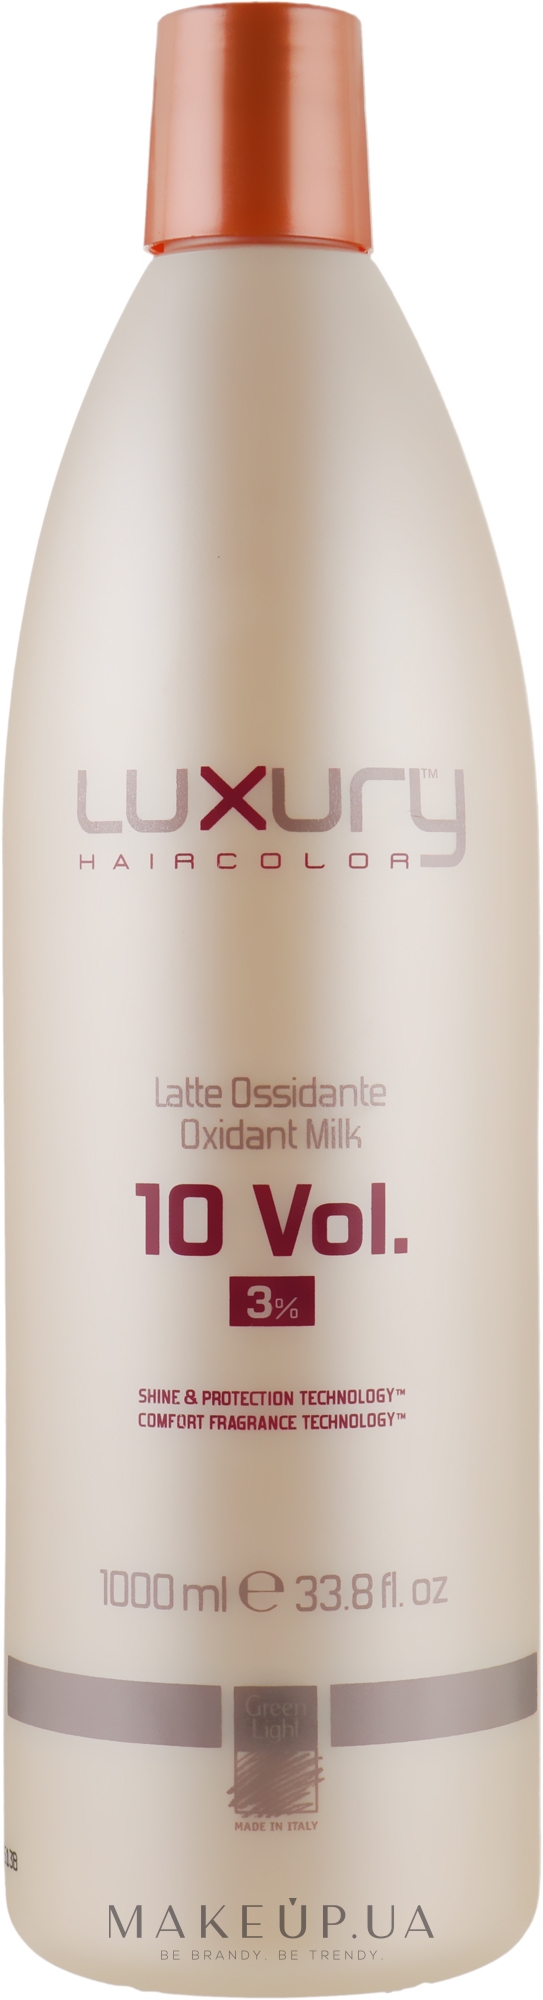 Молочный Оксидант - Green Light Luxury Haircolor Oxidant Milk 3% 10 vol. — фото 1000ml